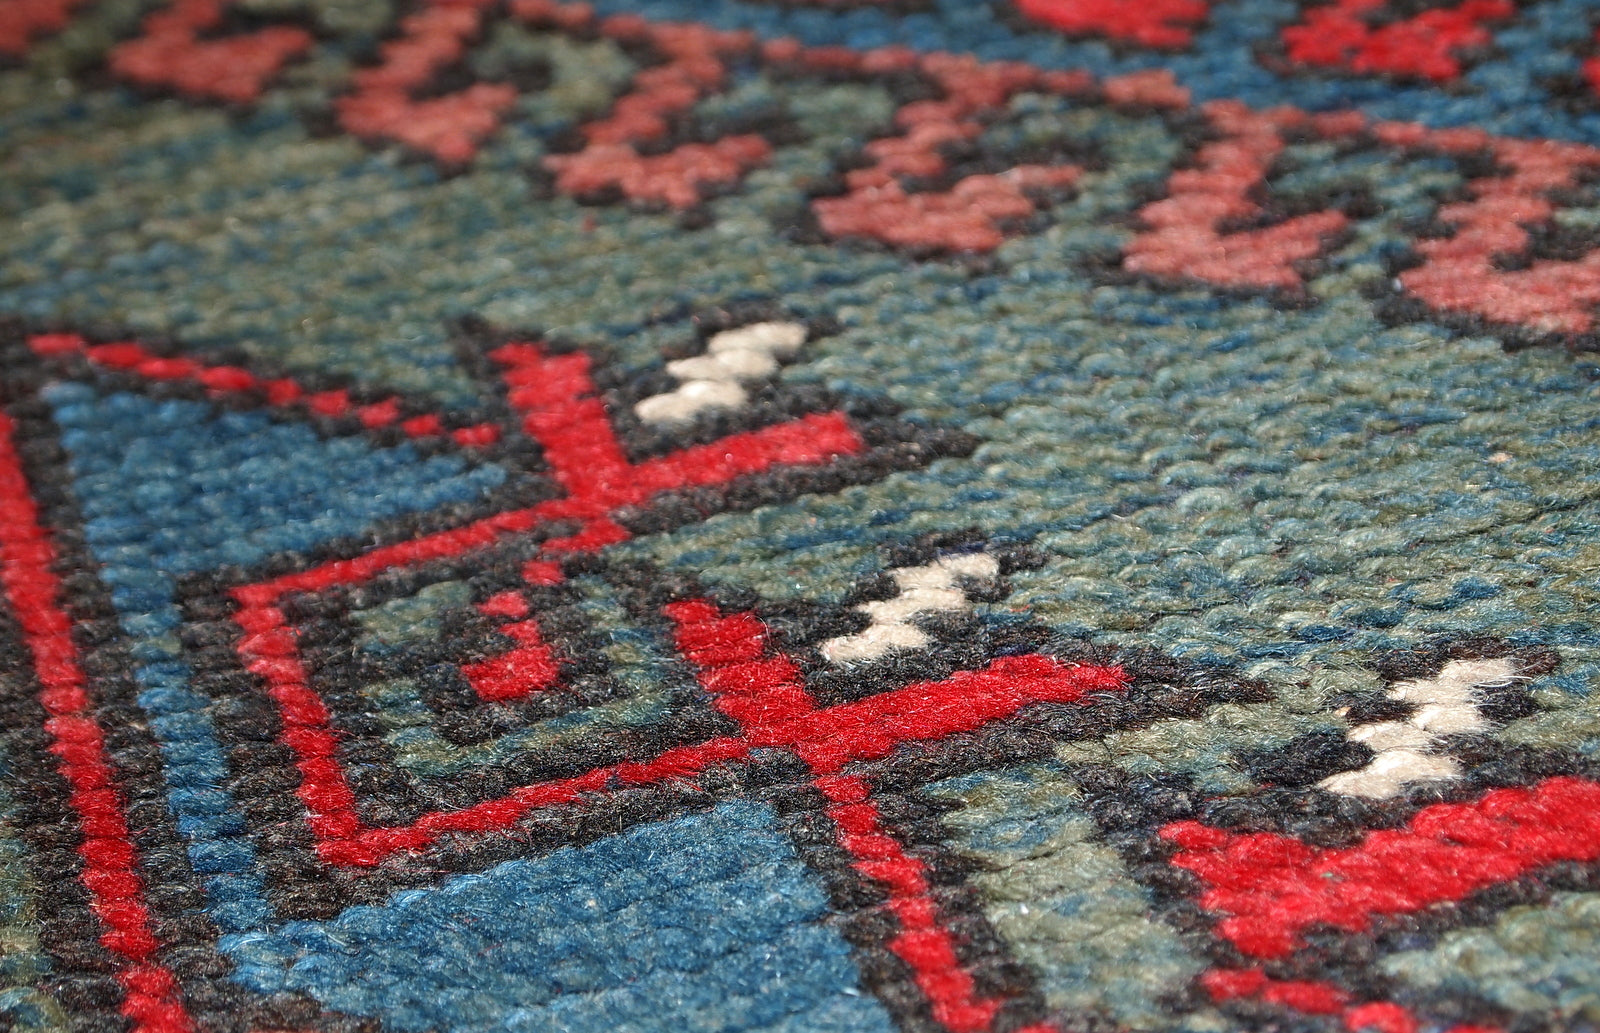 Handmade antique Turkish Anatolian rug, 1920s